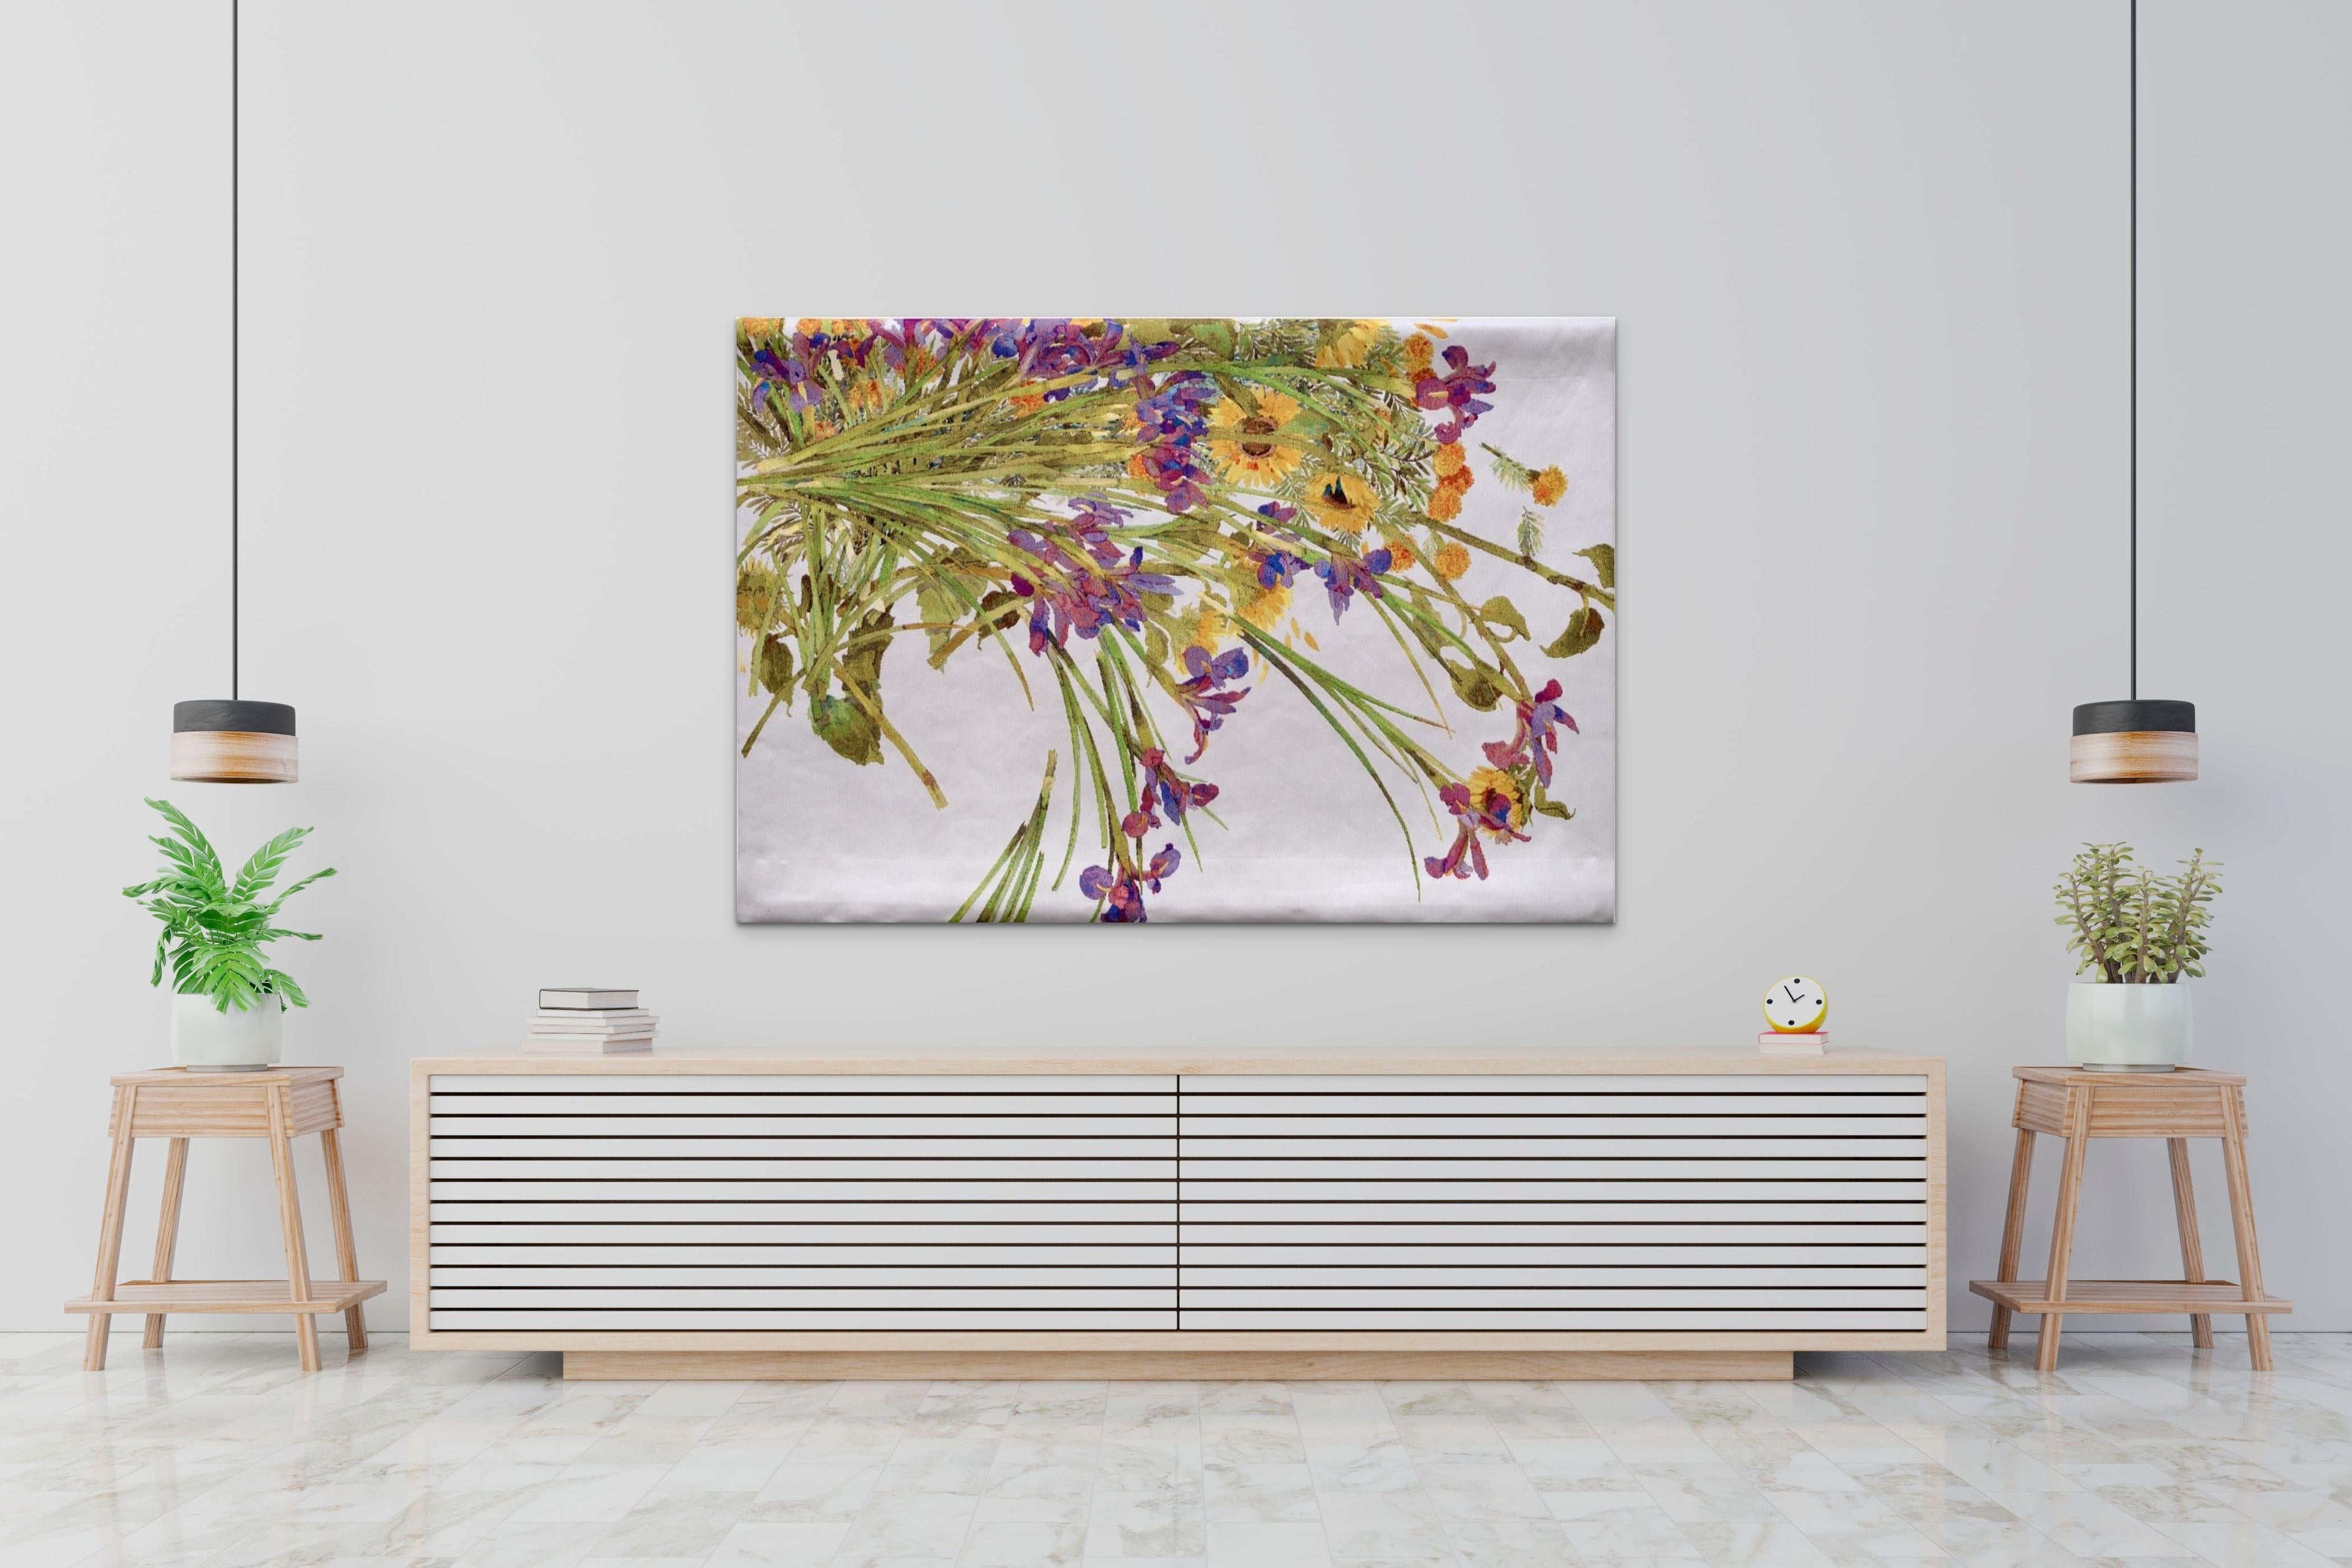 Flower Cascade - tapestry ltd ed. - Contemporary Mixed Media Art by Gary Bukovnik